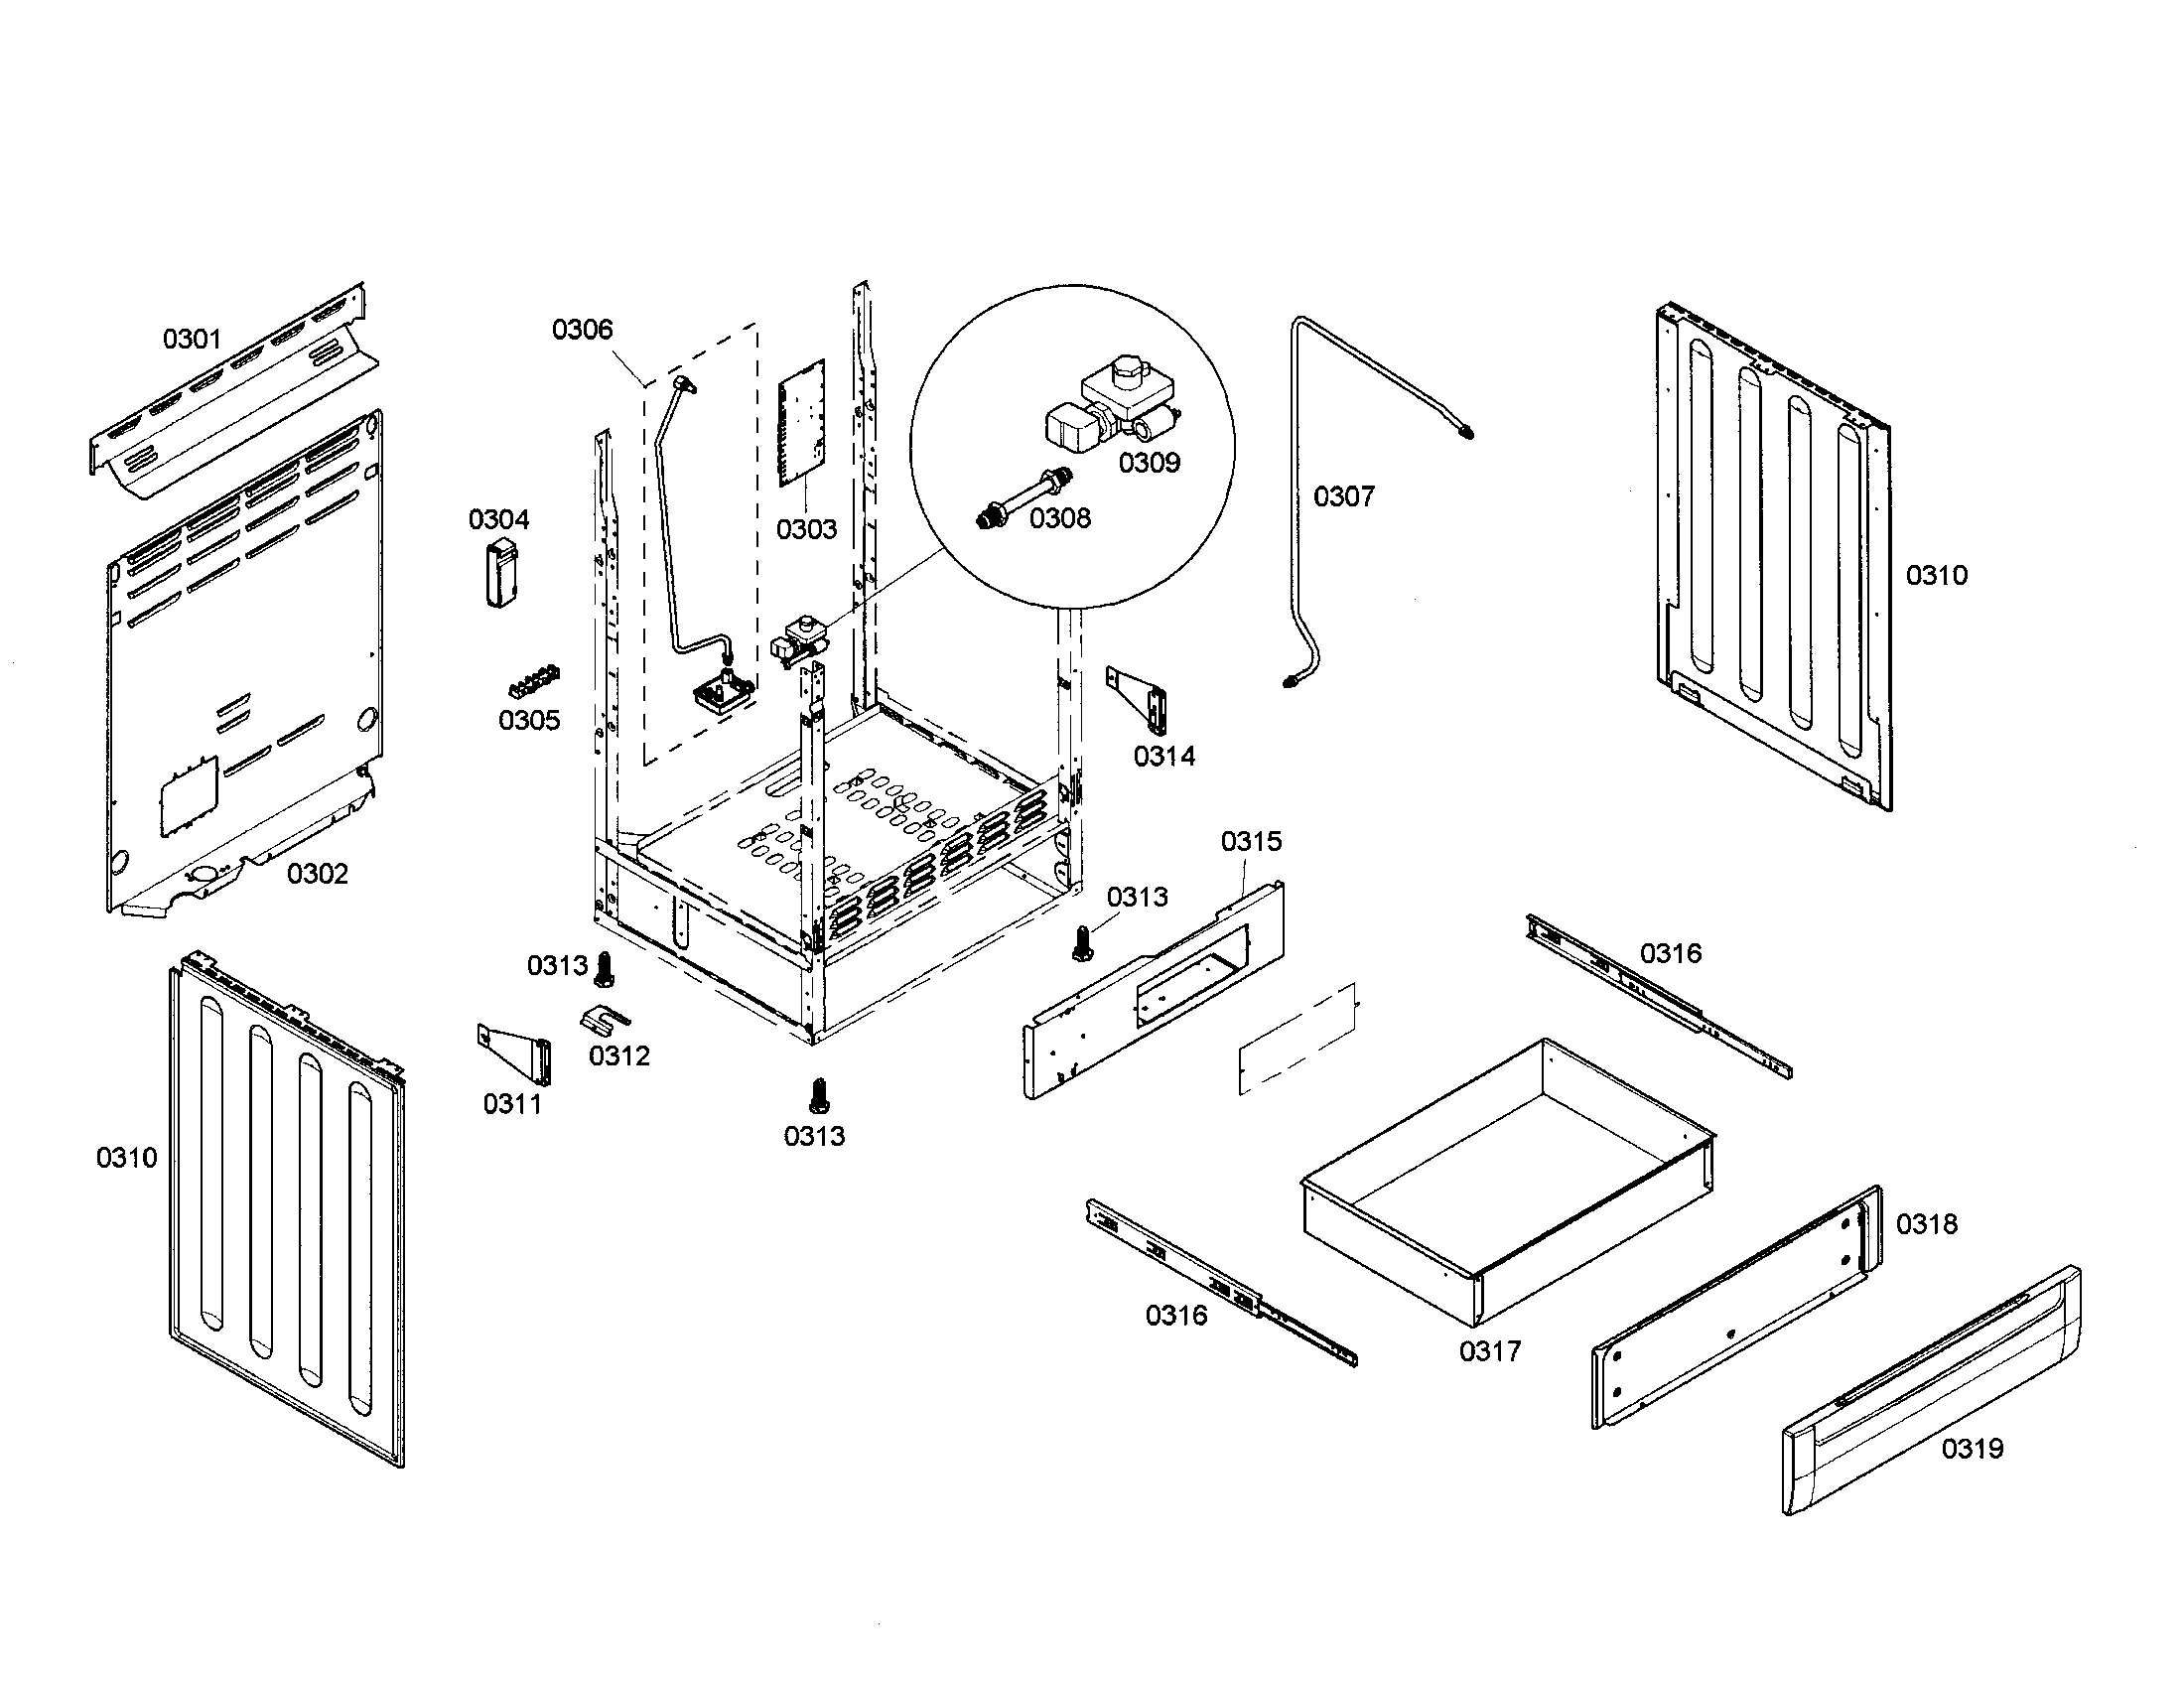 35 Bosch Oven Parts Diagram